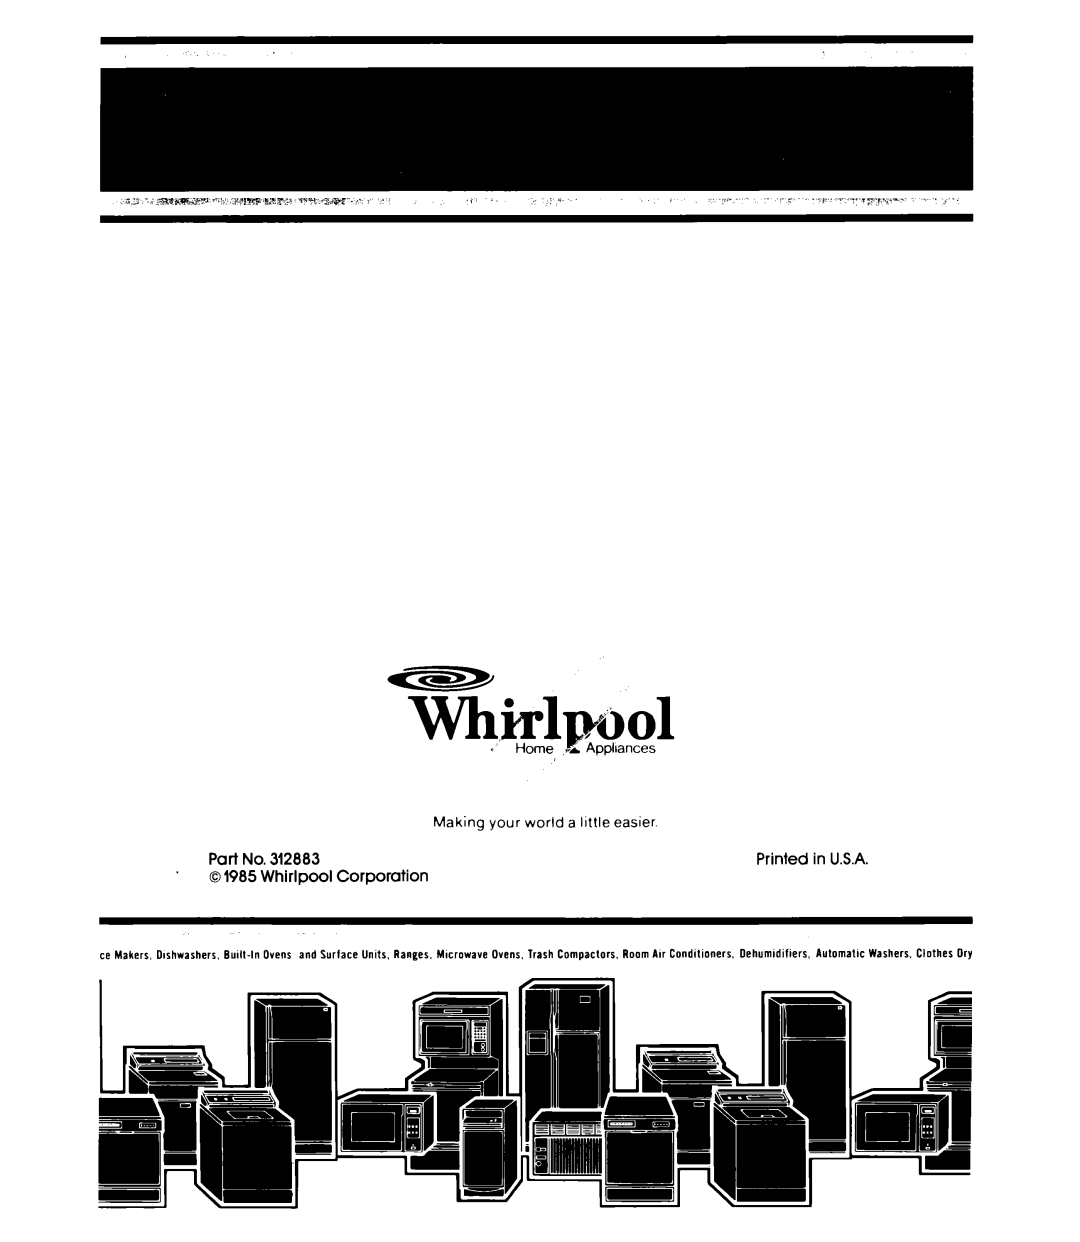 Whirlpool MW850EXP, MW85OOXP manual 0 1985 Whirlpool, Corporation 